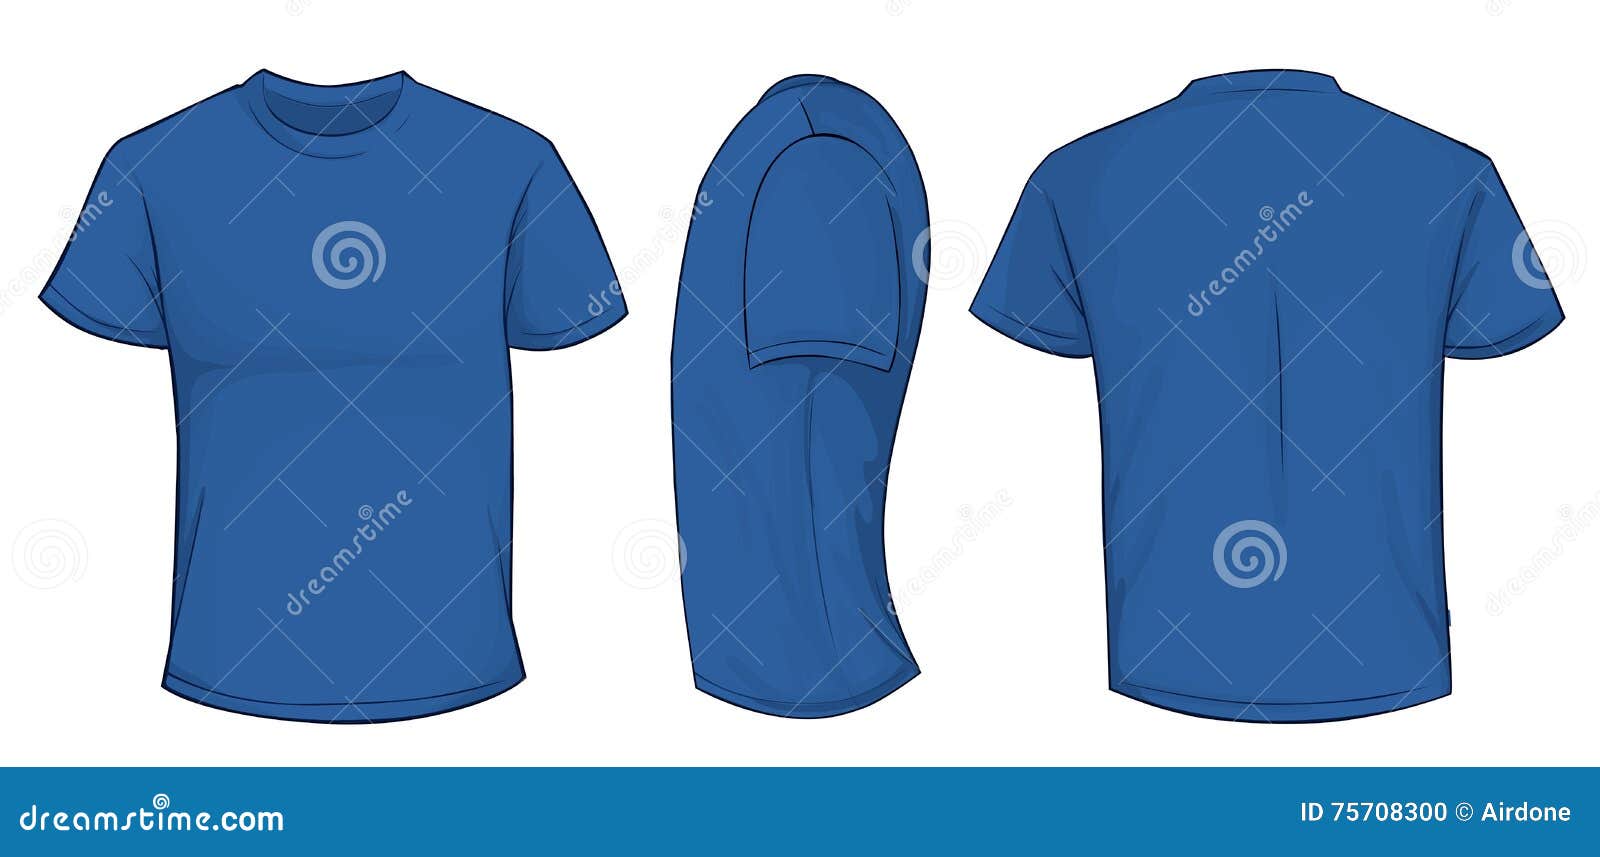 Download Blue Shirt Template stock illustration. Illustration of ...